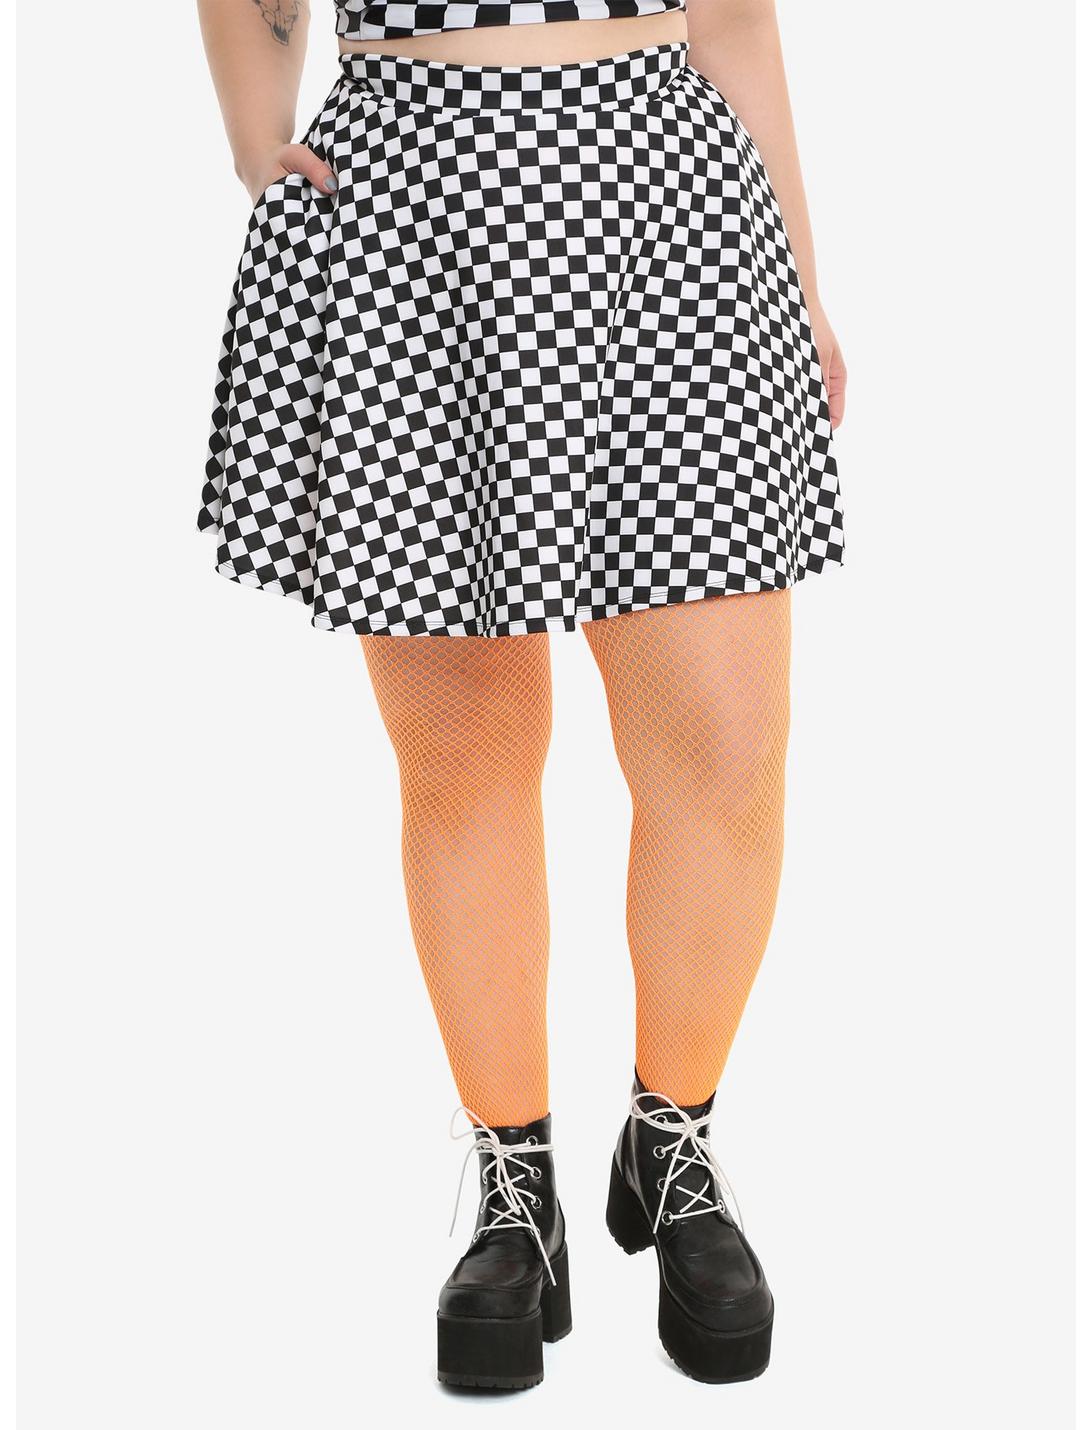 Black & White Checkered Skirt Plus Size, BLACK, hi-res